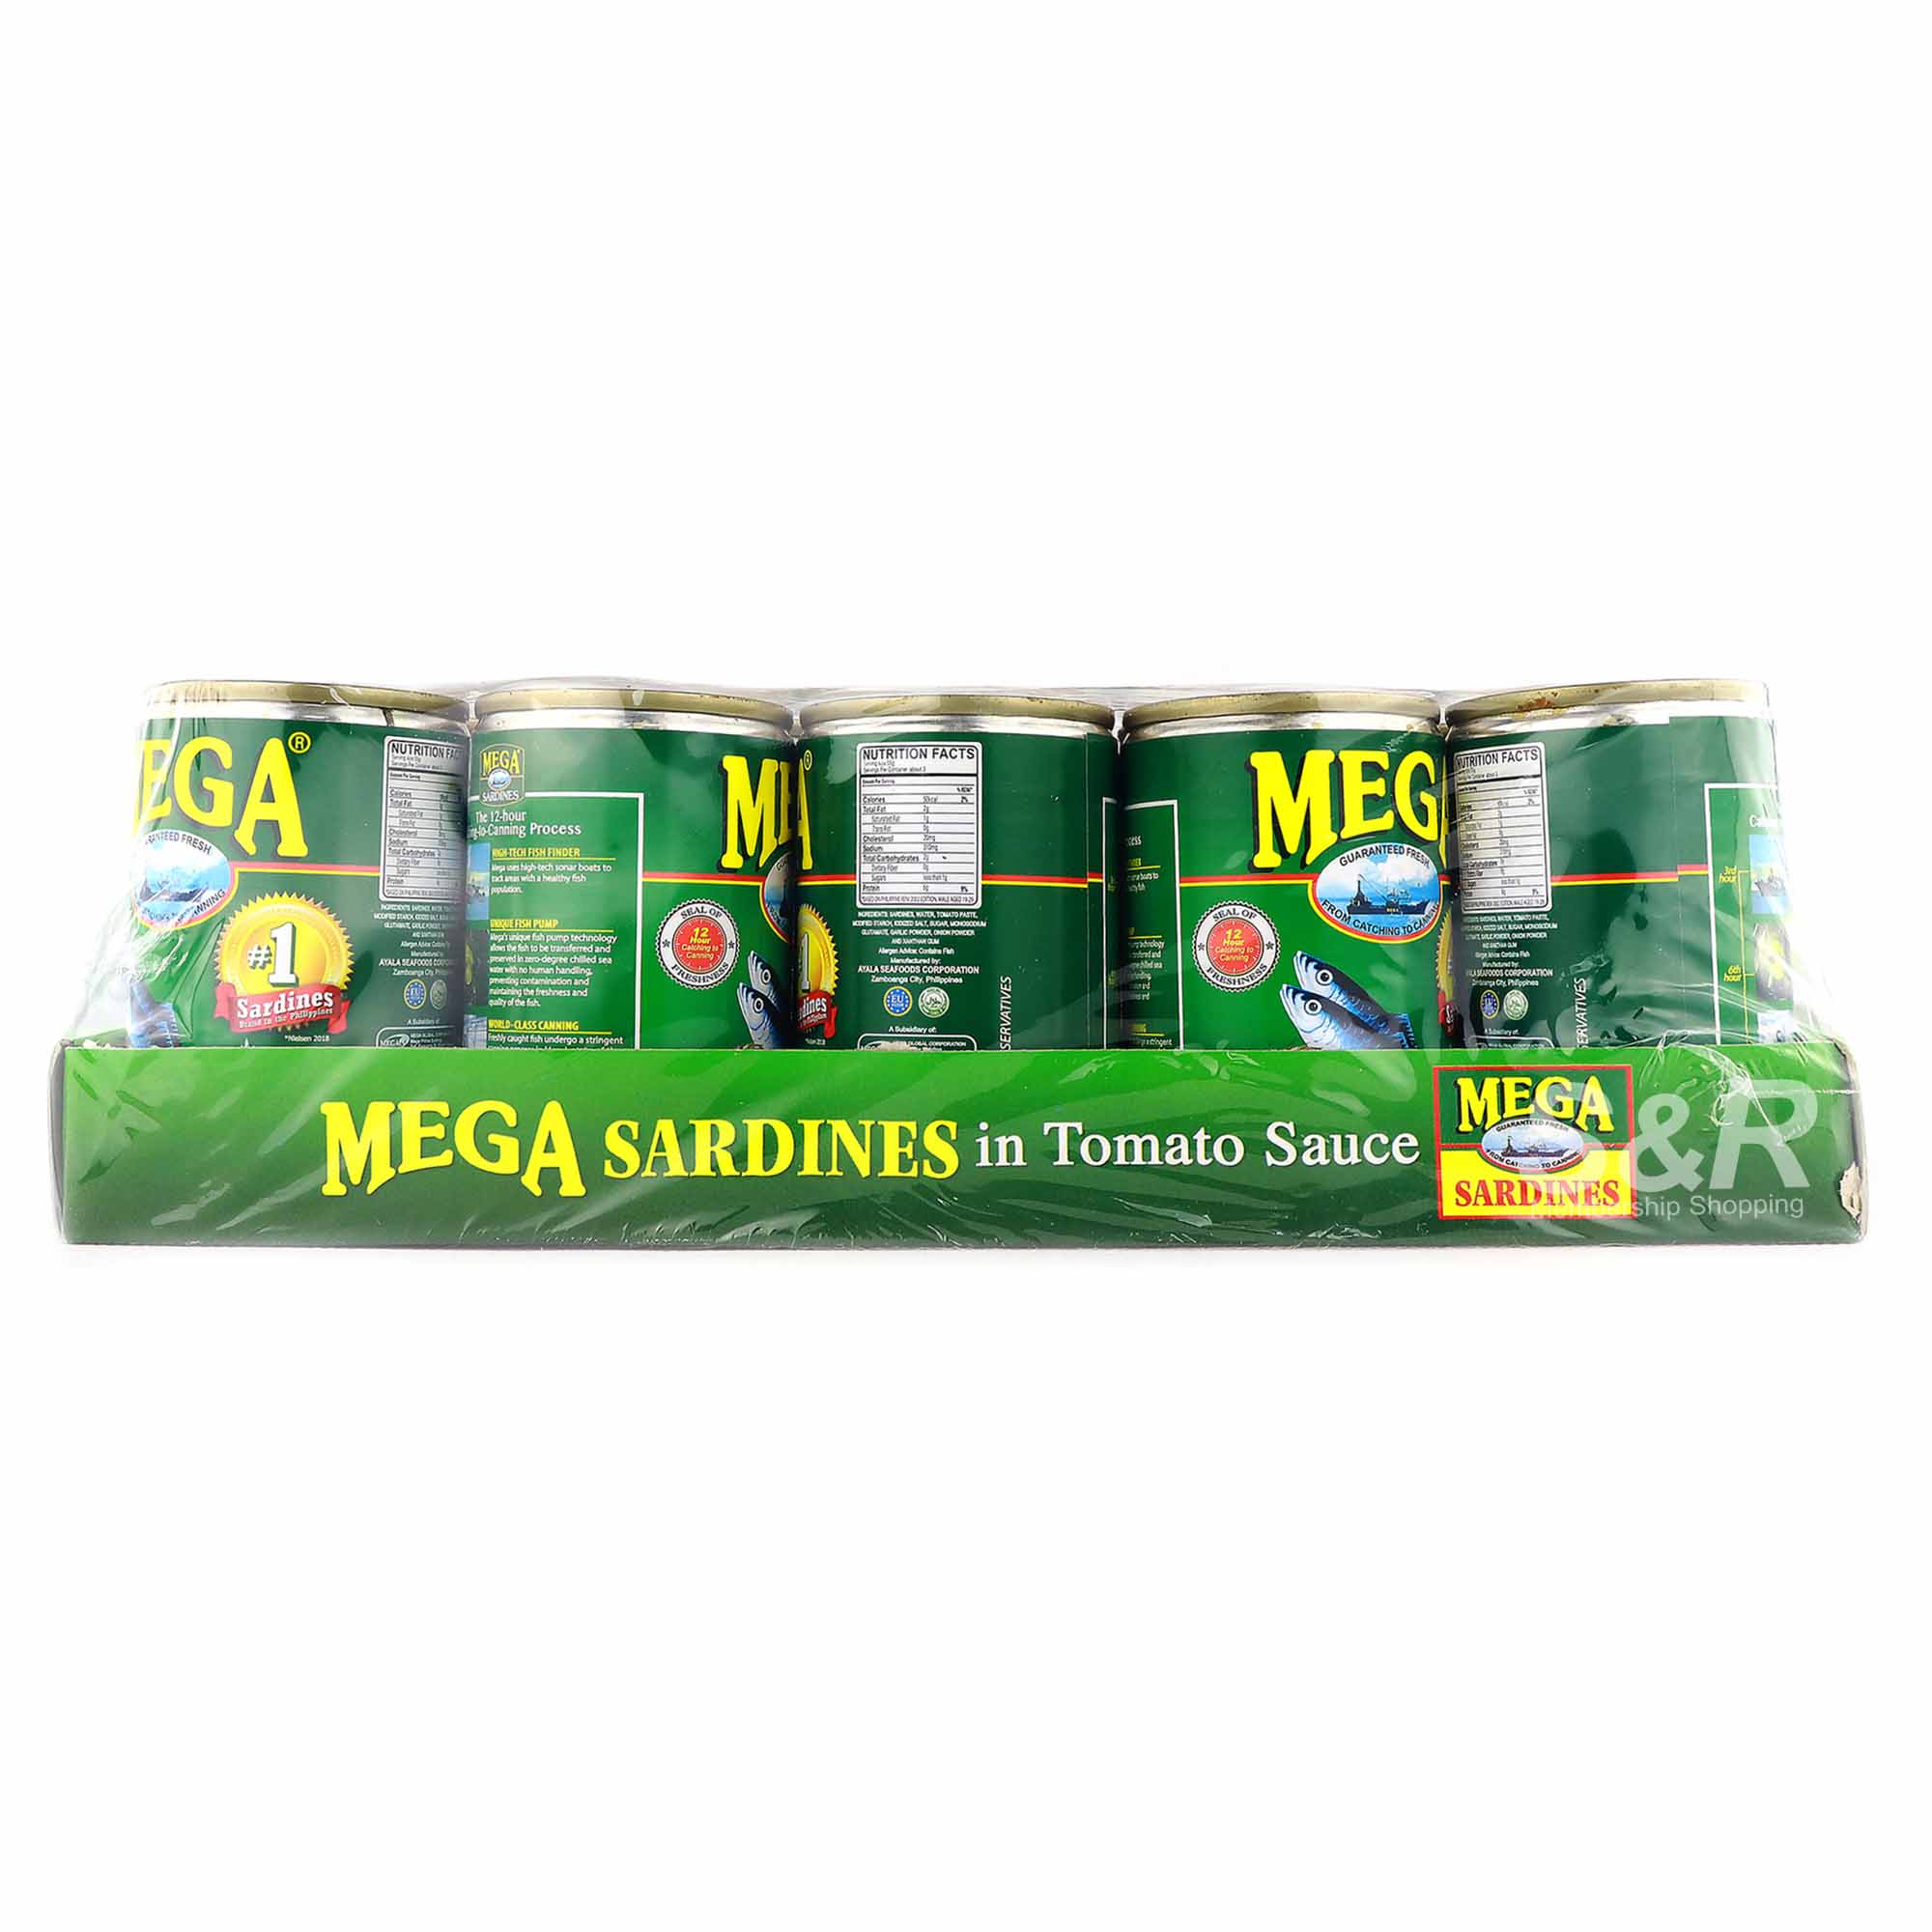 Mega Sardines in Tomato Sauce 10 cans